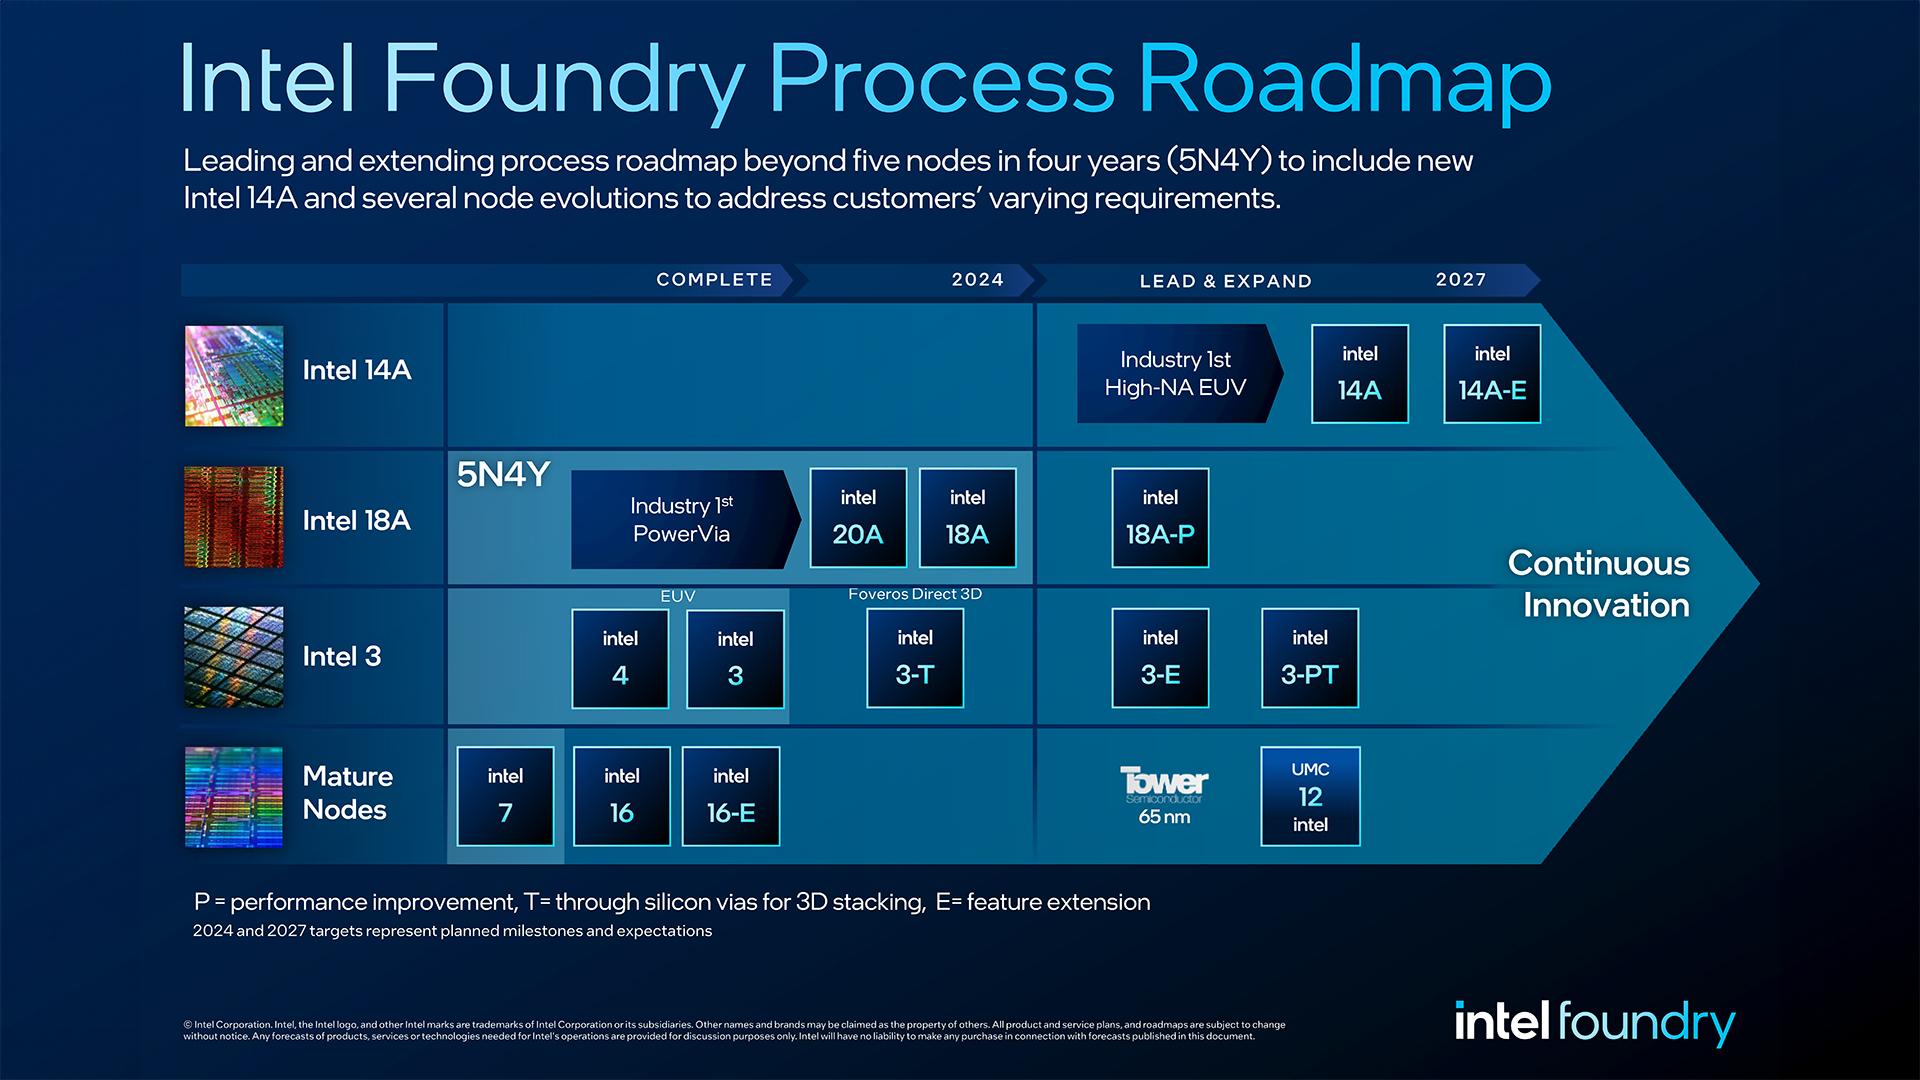 Intel's process roadmap